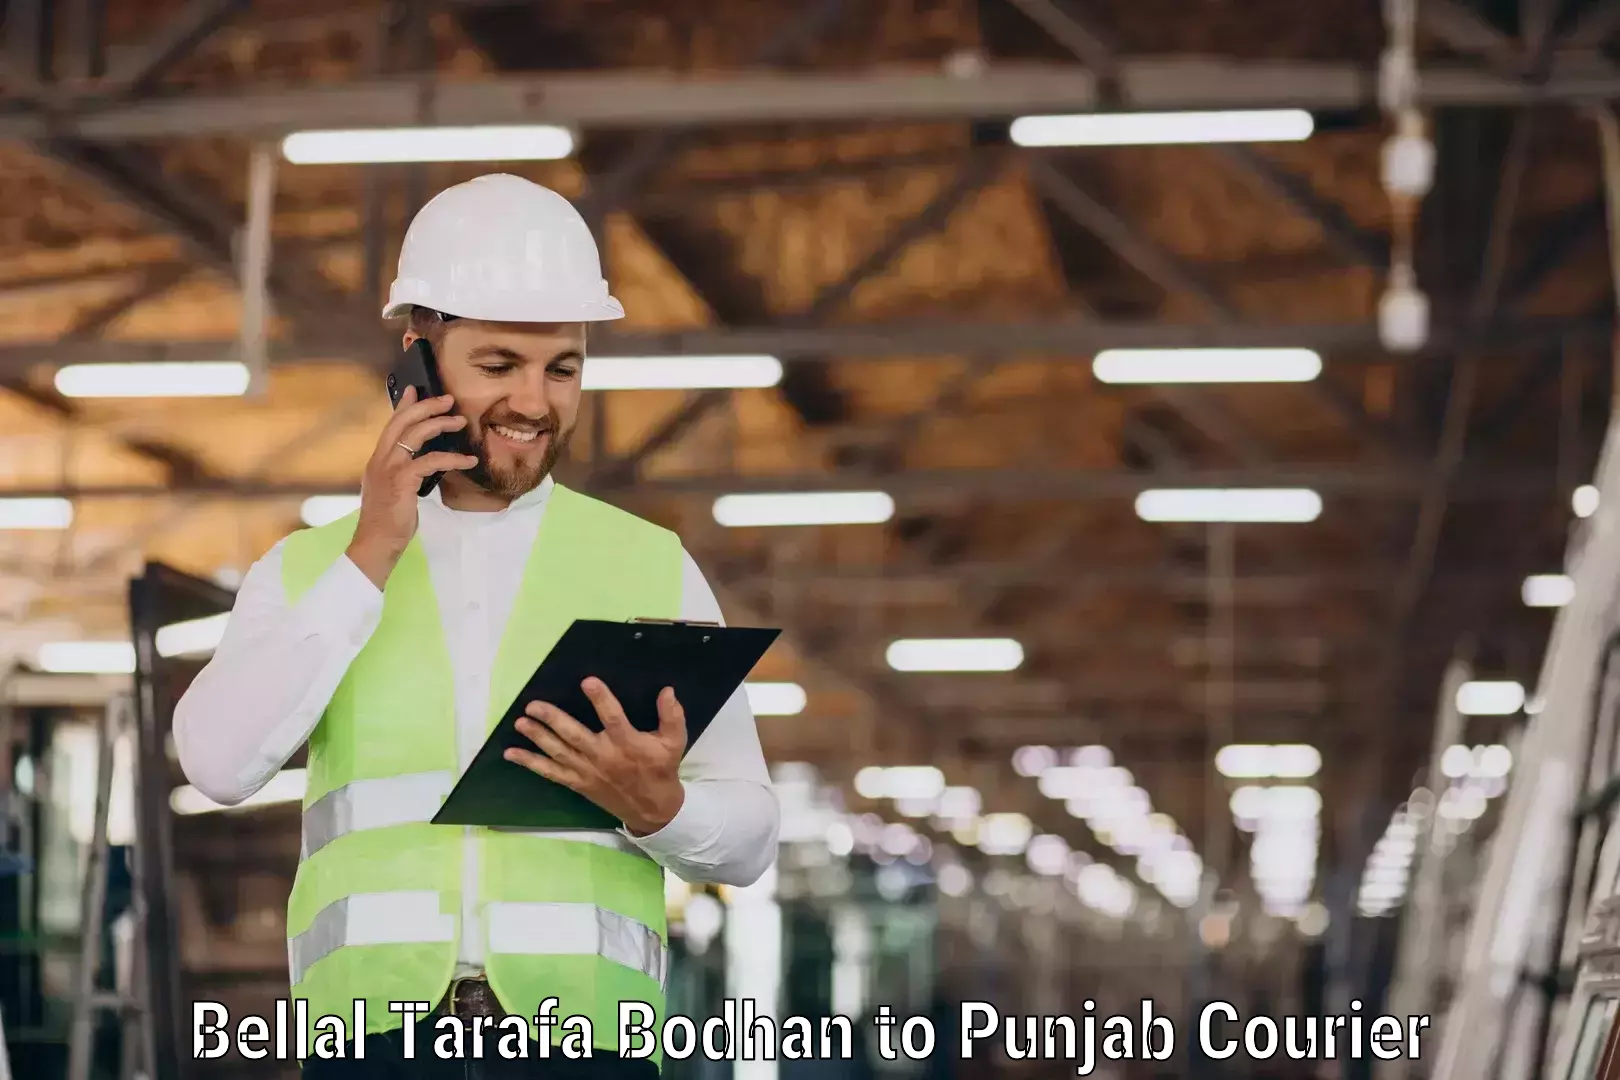 Reliable parcel services Bellal Tarafa Bodhan to Punjab